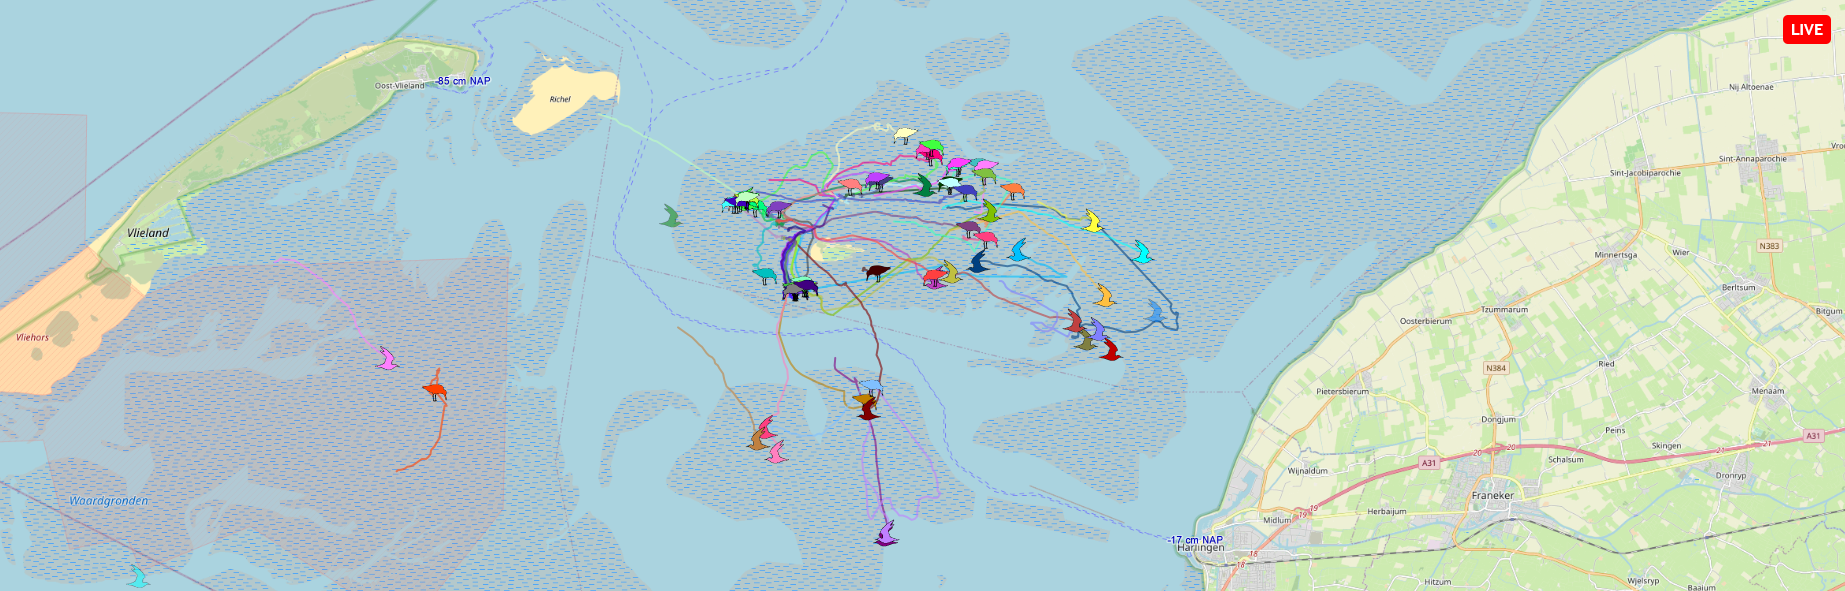 Birds can be followed in high detail in the Dutch Wadden Sea with the WATLAS system. Image: WATLAS, NIOZ.